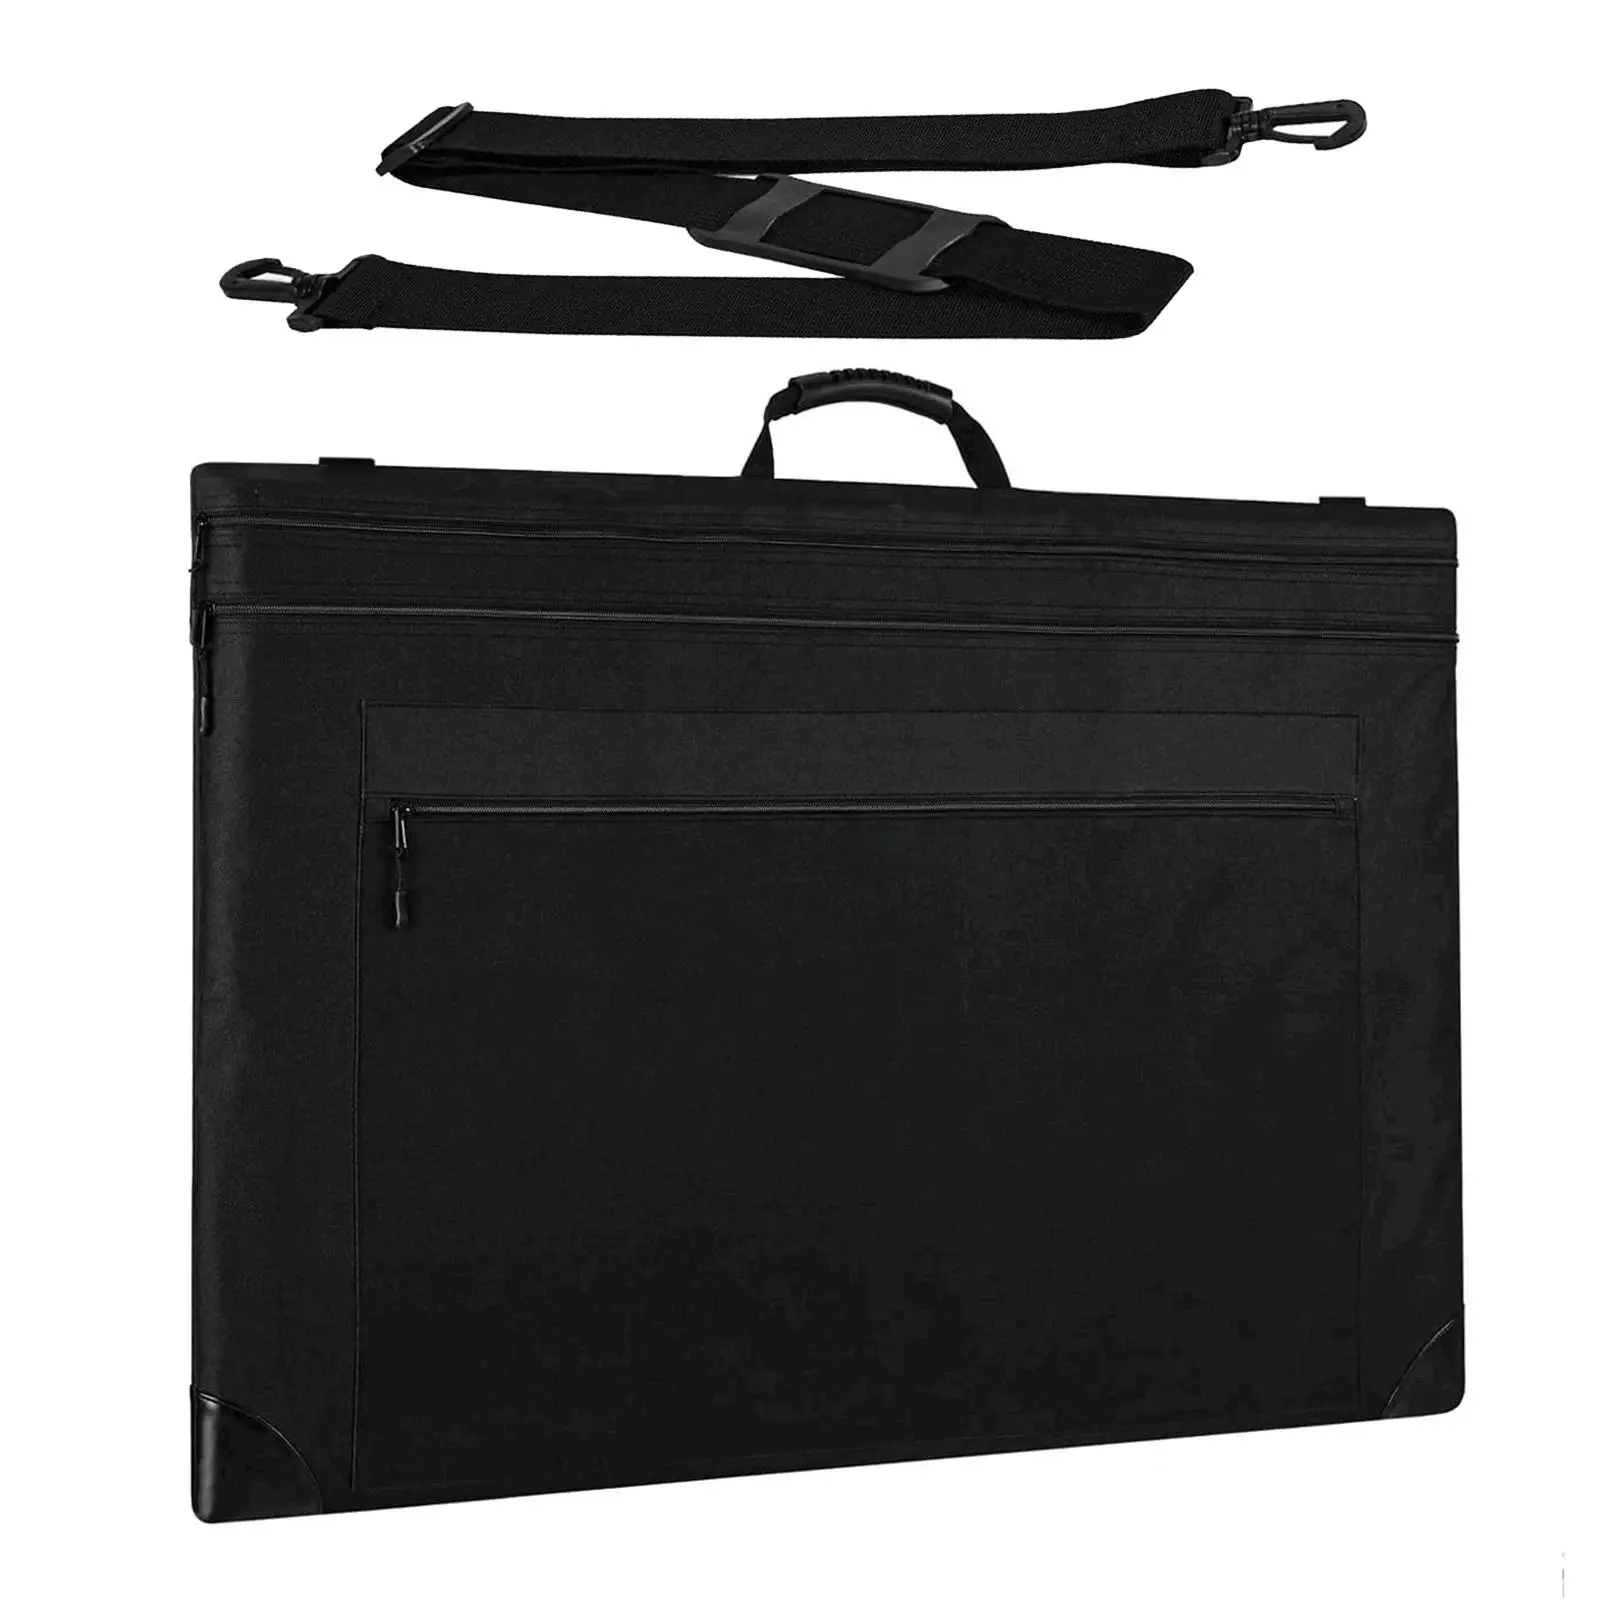 Light Weight Art Portfolio Bag Polyester Folder Bag with Strap Sketch Bag Waterproof Carrying Bag for Art Work Artist Painting